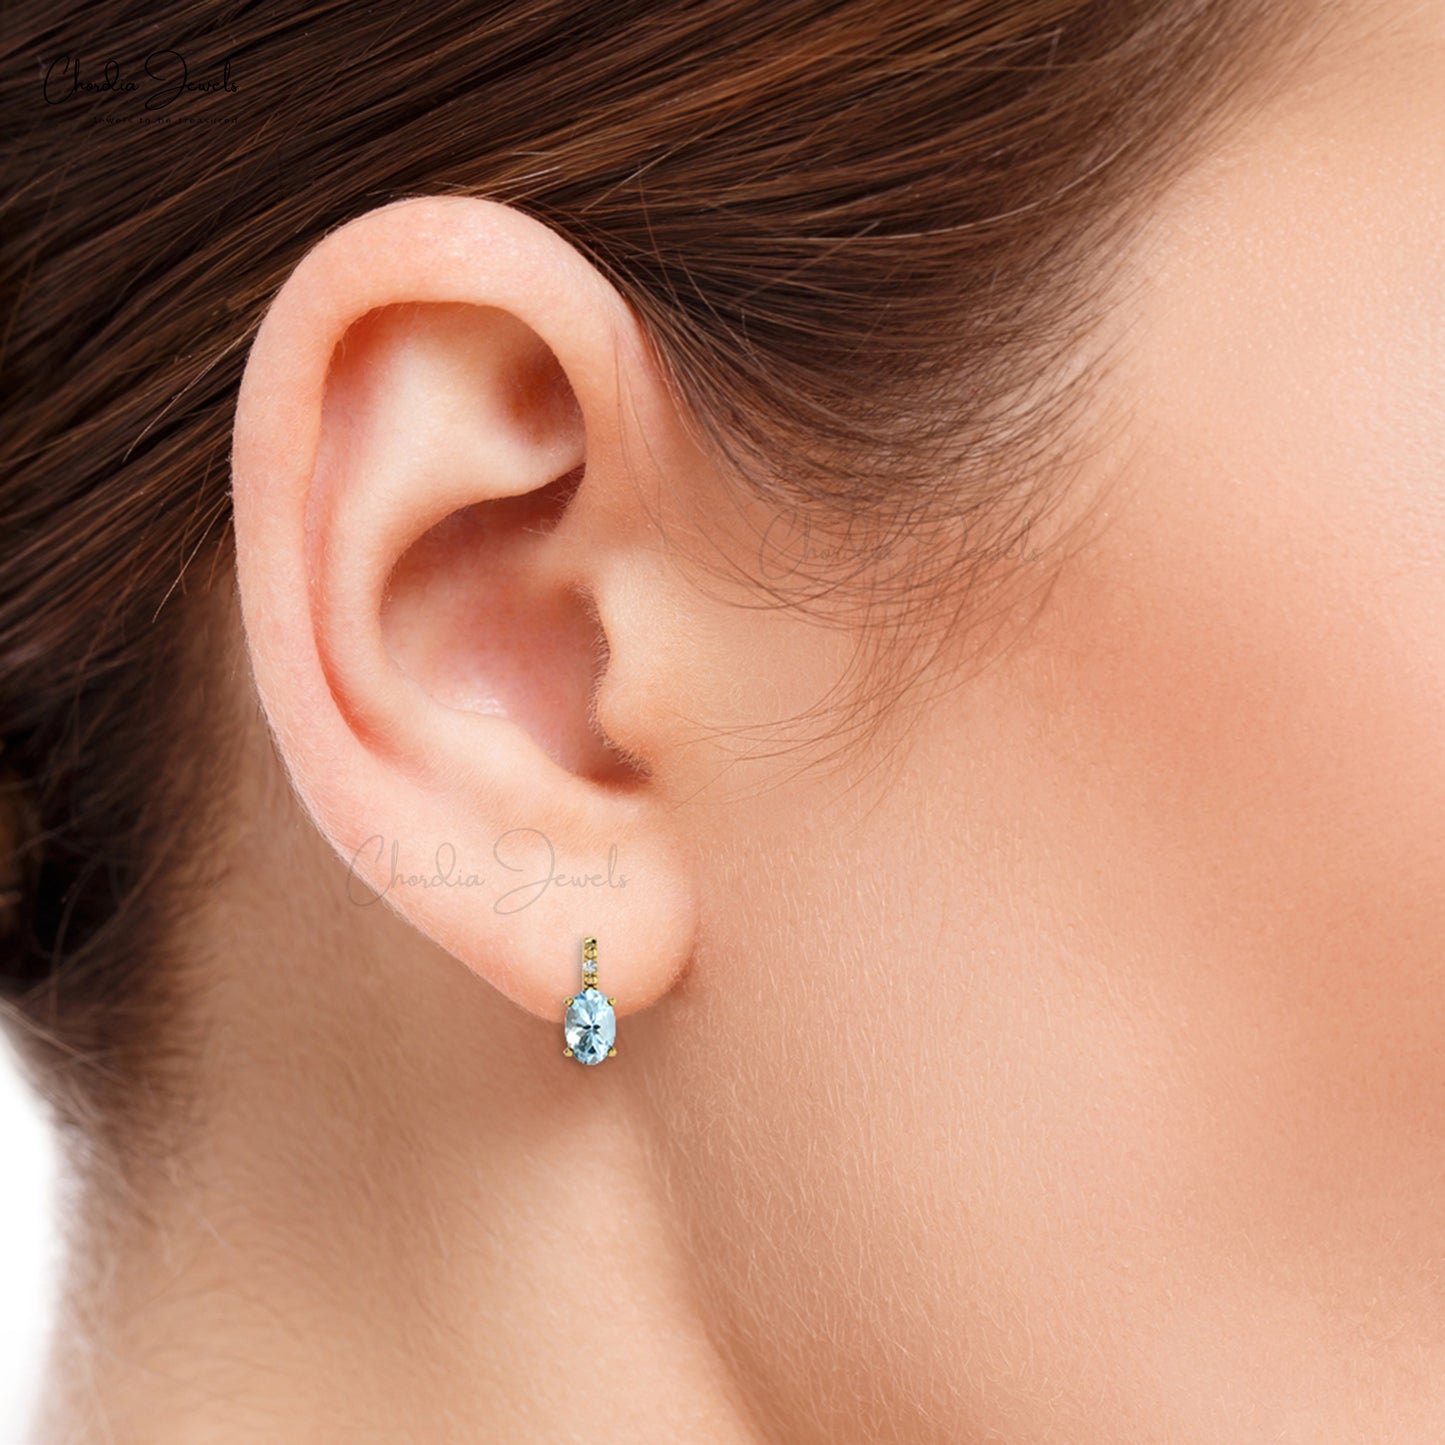 Natural Aquamarine Diamond Earrings 14k Real Gold Handmade Earrings 6x4mm Oval Cut Gemstone Jewelry For Birthday Gift